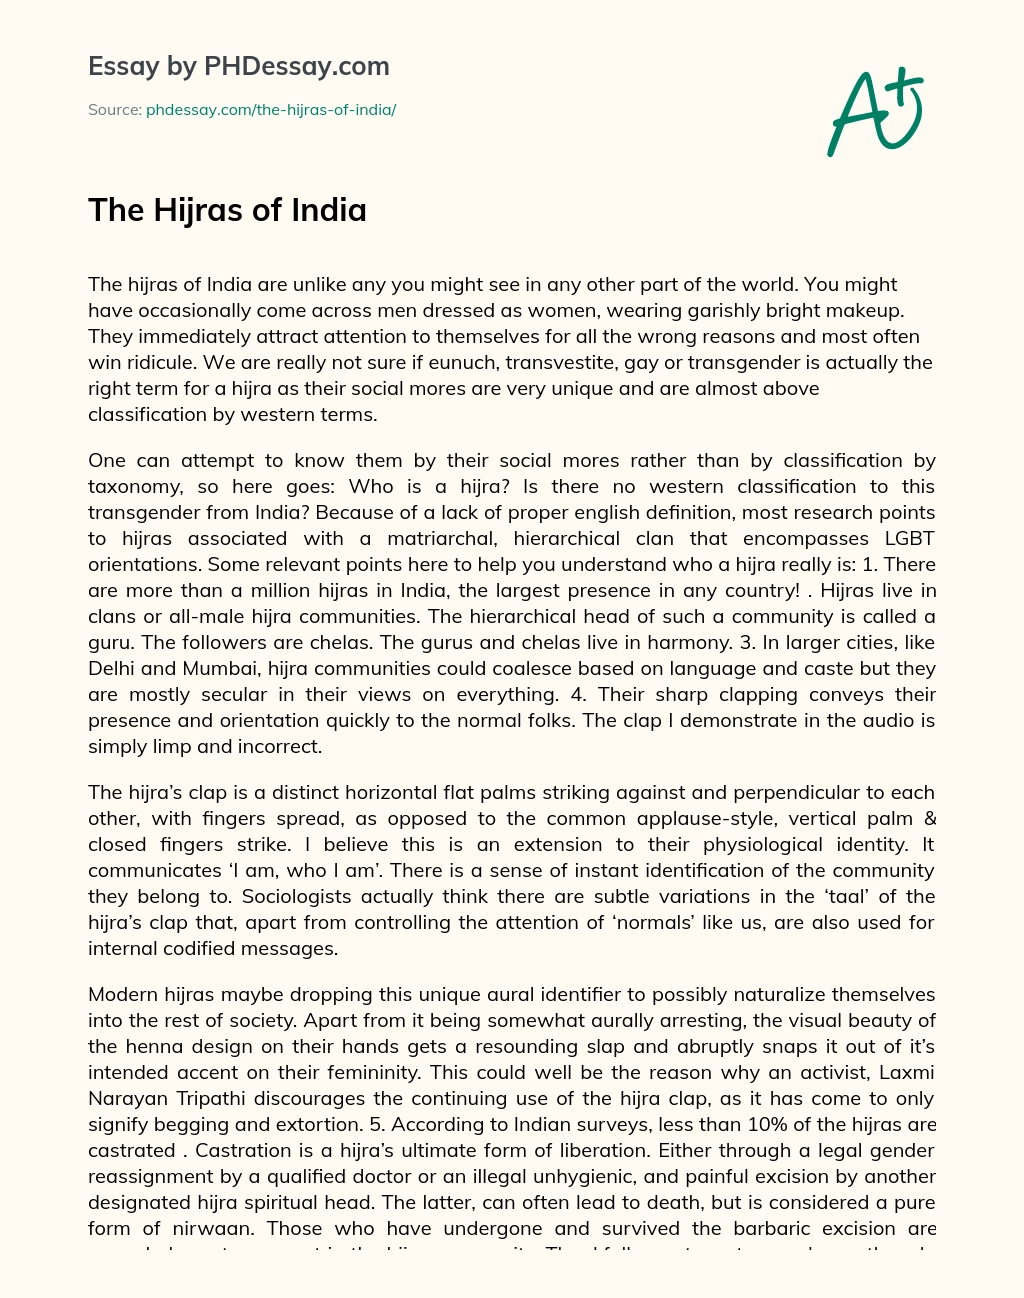 The Hijras of India essay